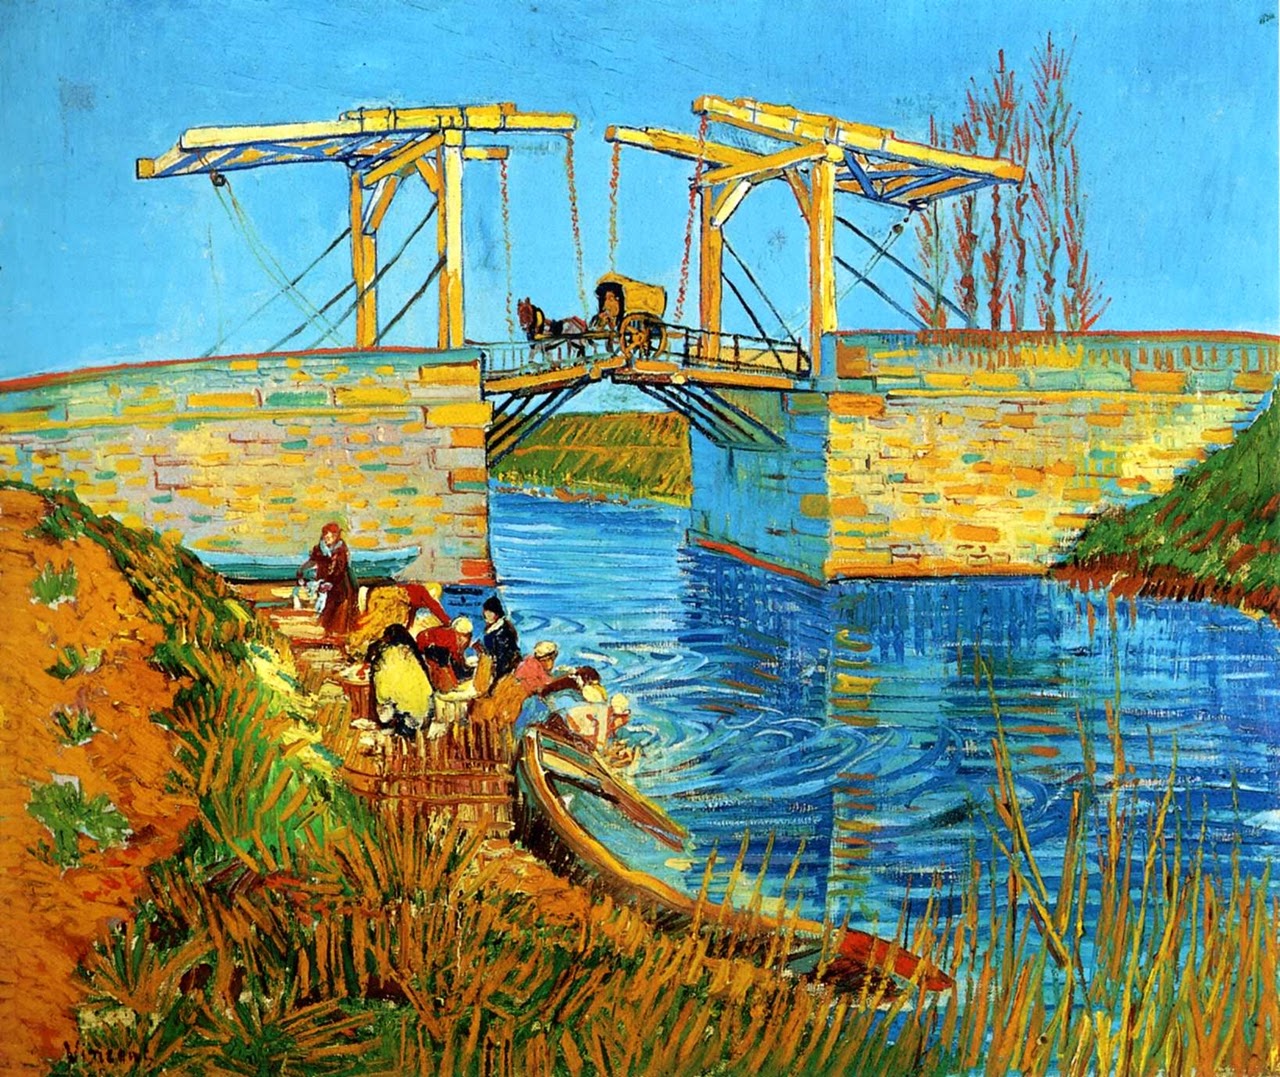 Vincent+Van+Gogh-1853-1890 (875).jpg